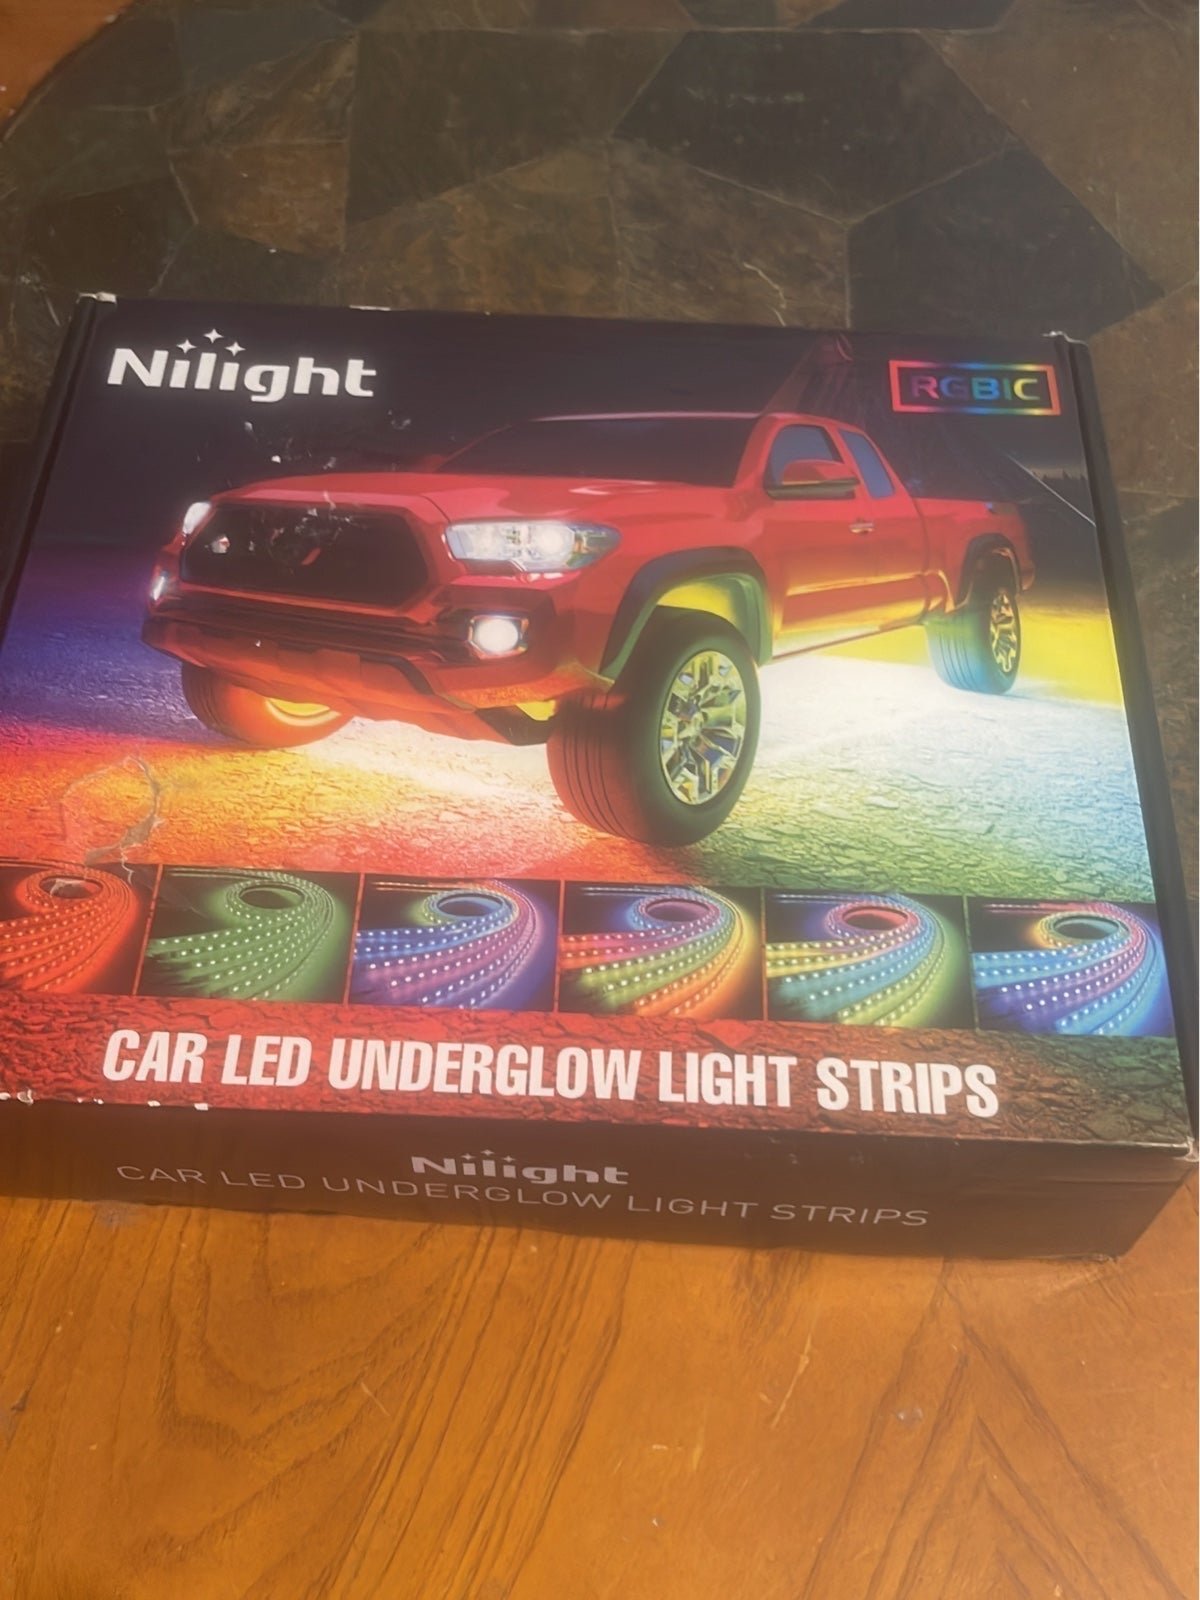 Nilight call LED under glow light strips m1AhKUEPO